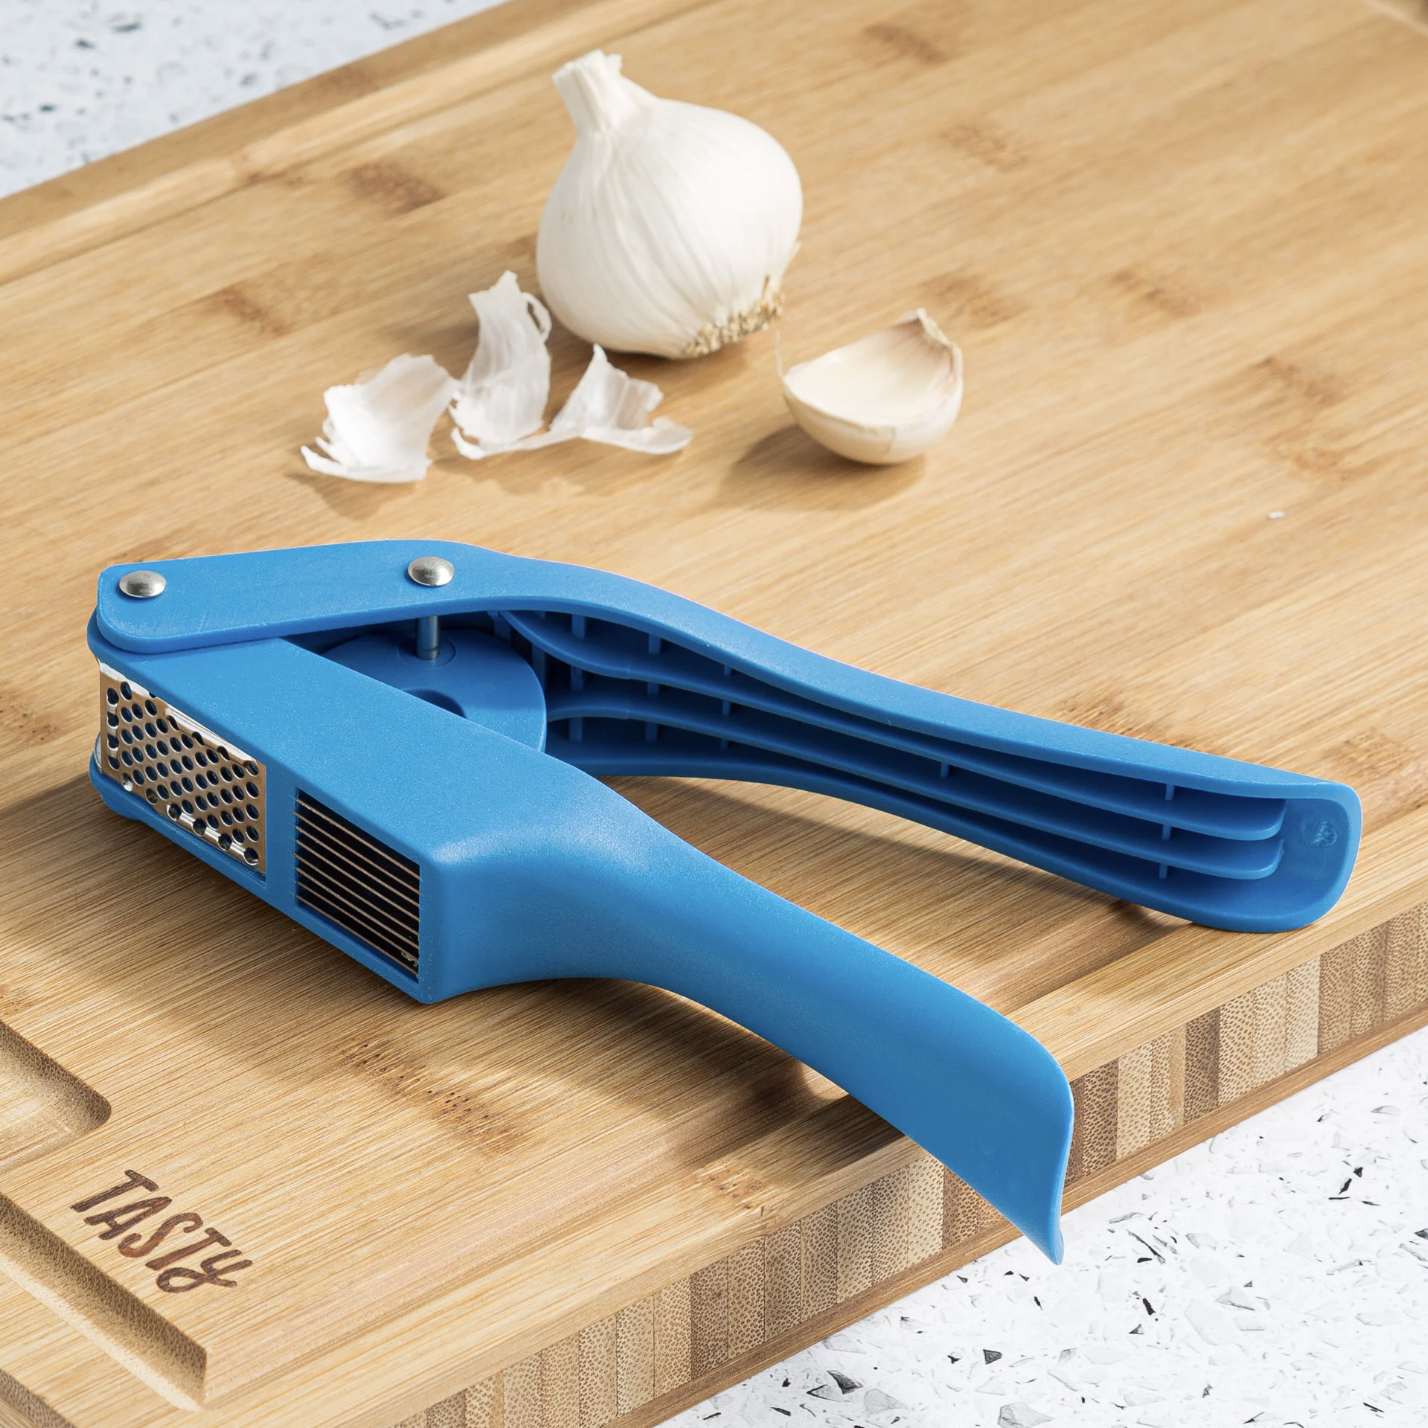 The blue garlic press on cutting board next to garlic cloves